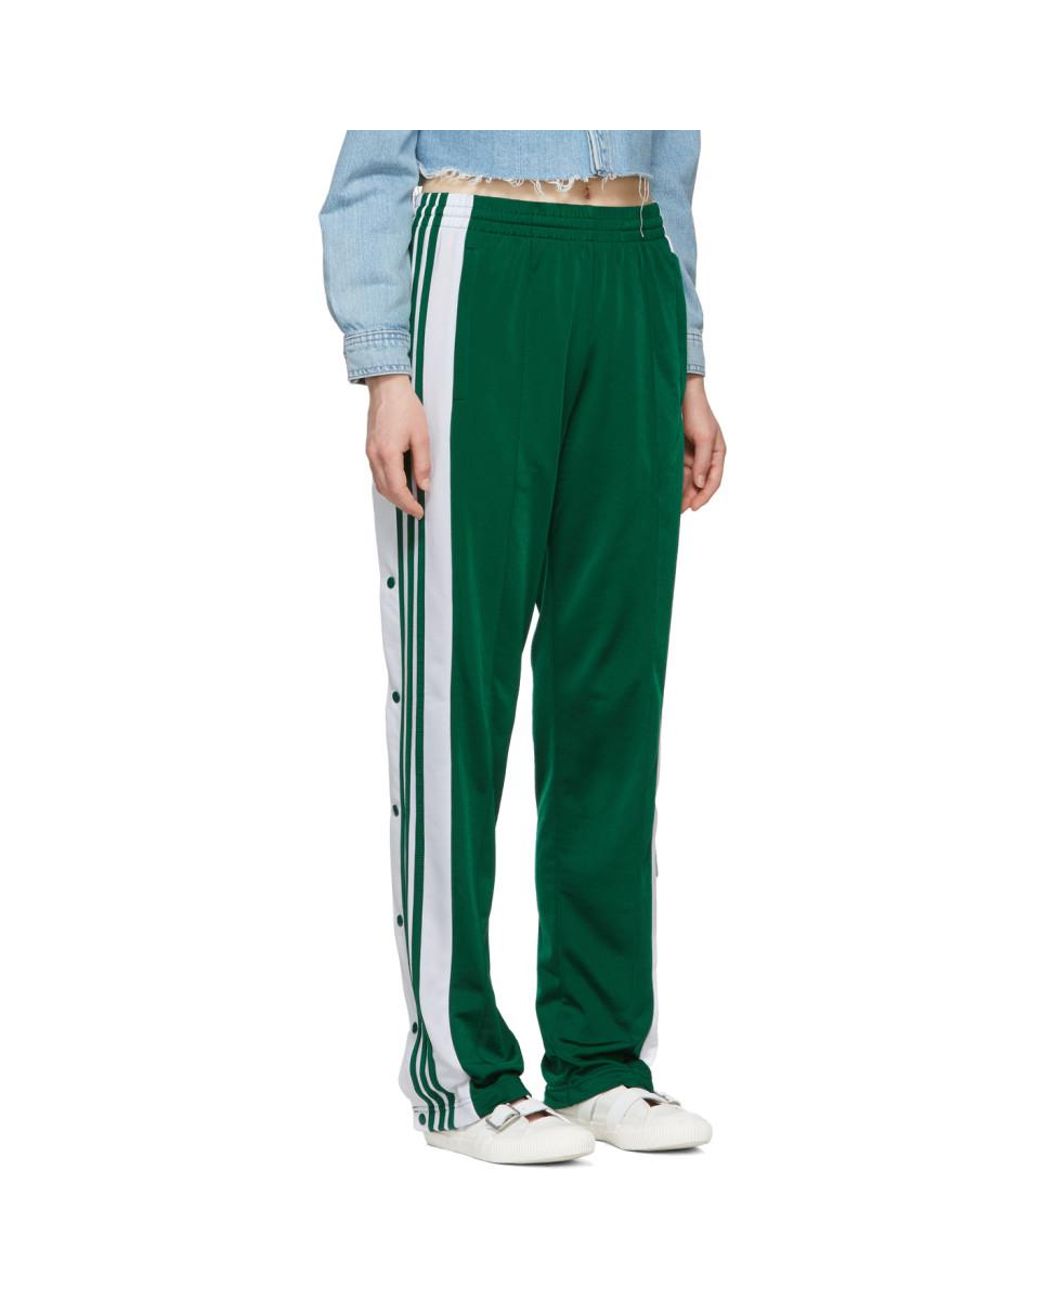 ensillar Absolutamente Estacionario adidas Originals Green Og Adibreak Track Pants | Lyst